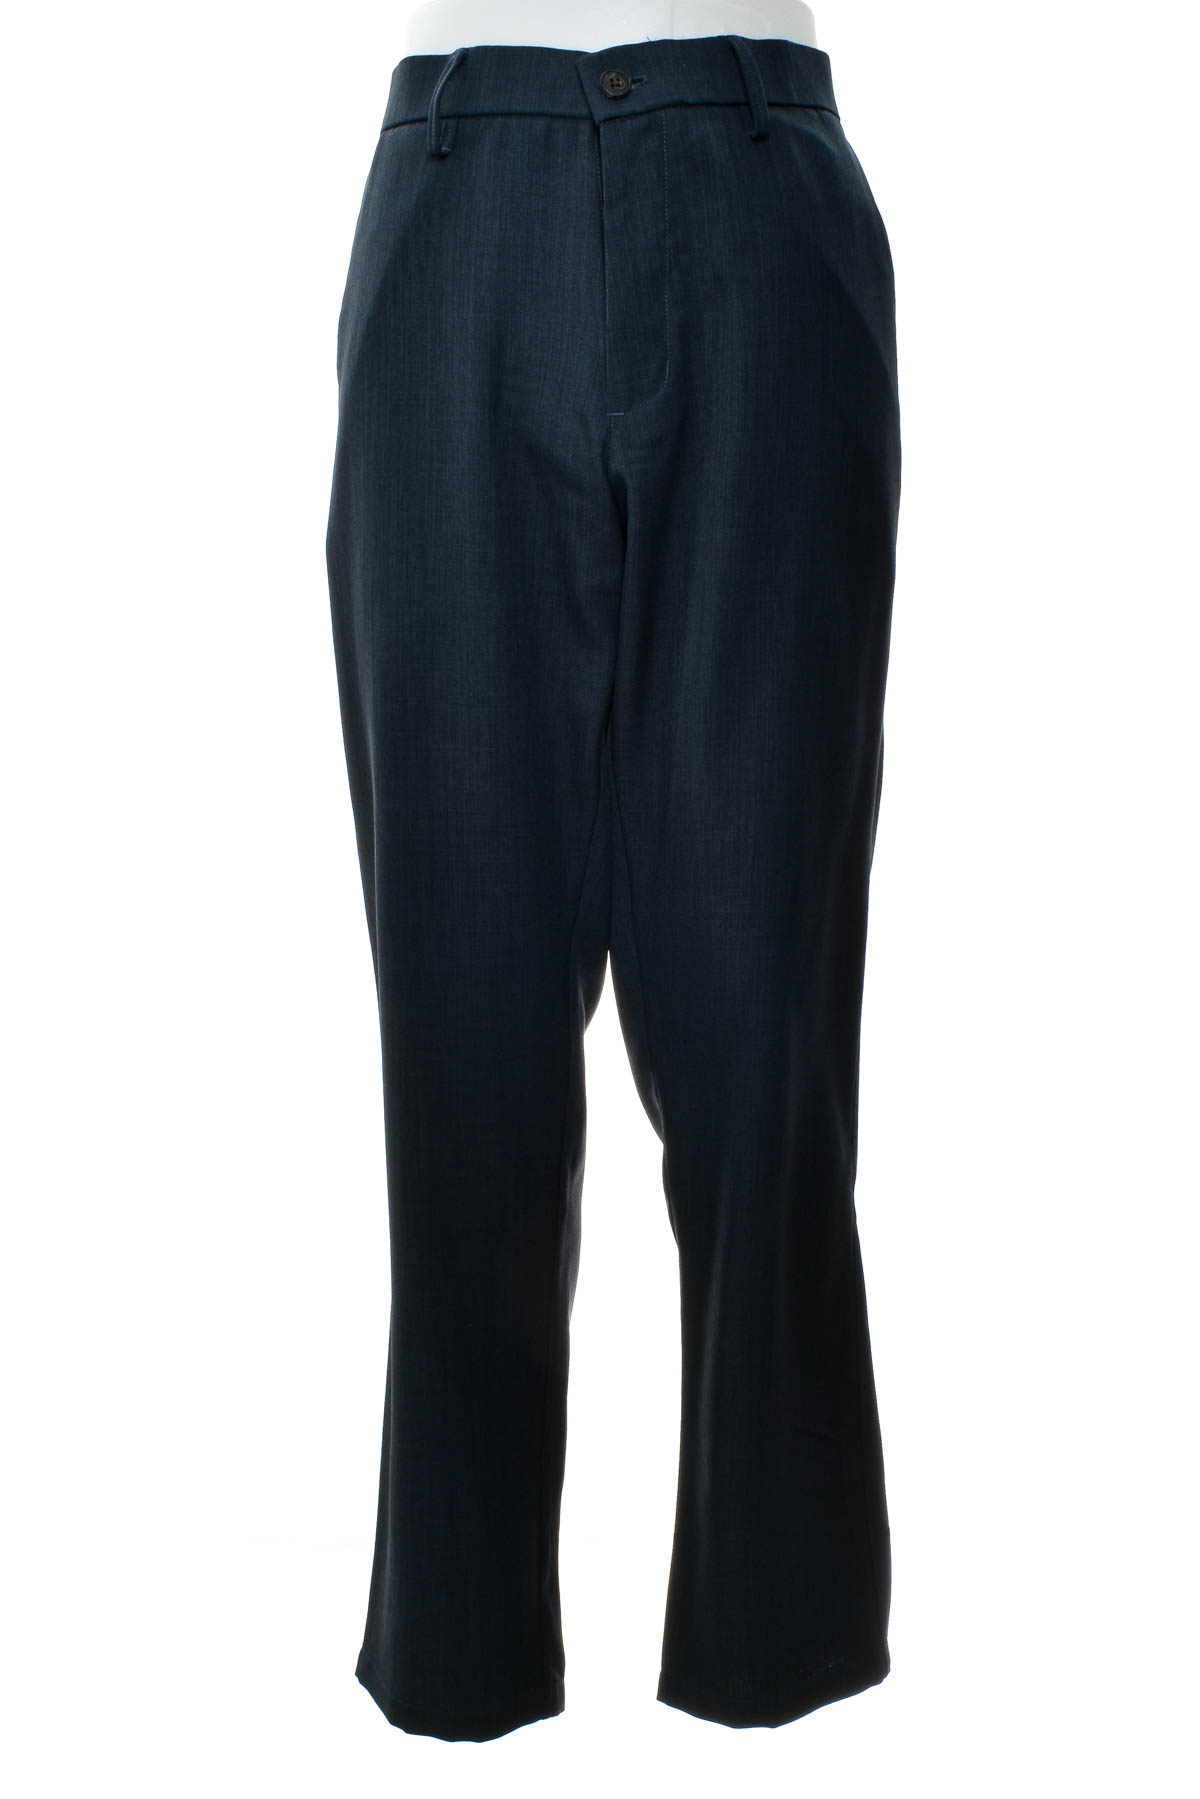 Pantalon pentru bărbați - HAGGAR - 0